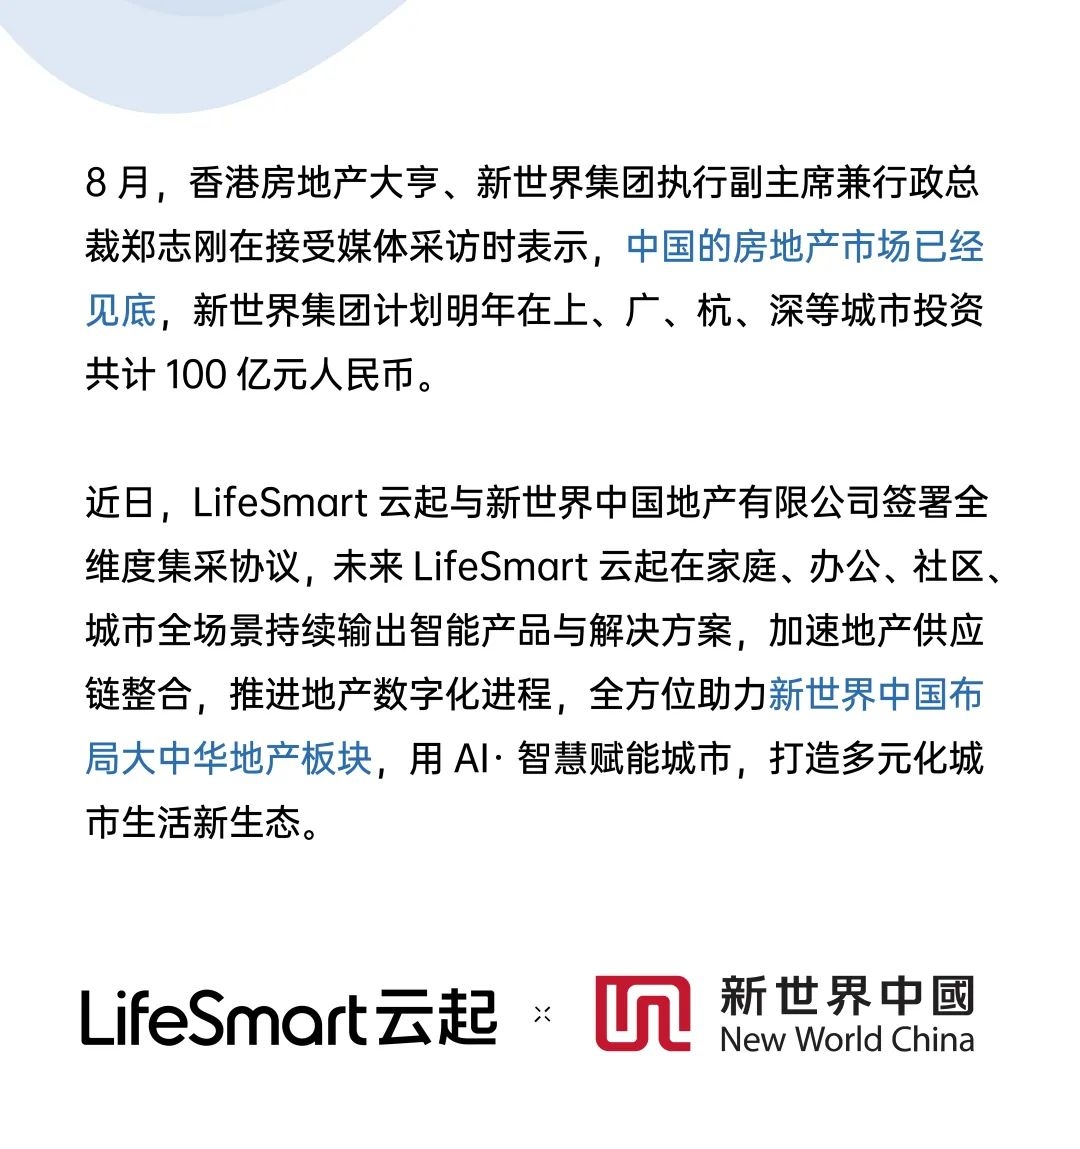 LifeSmart云起助力新世界100亿抄底房地产